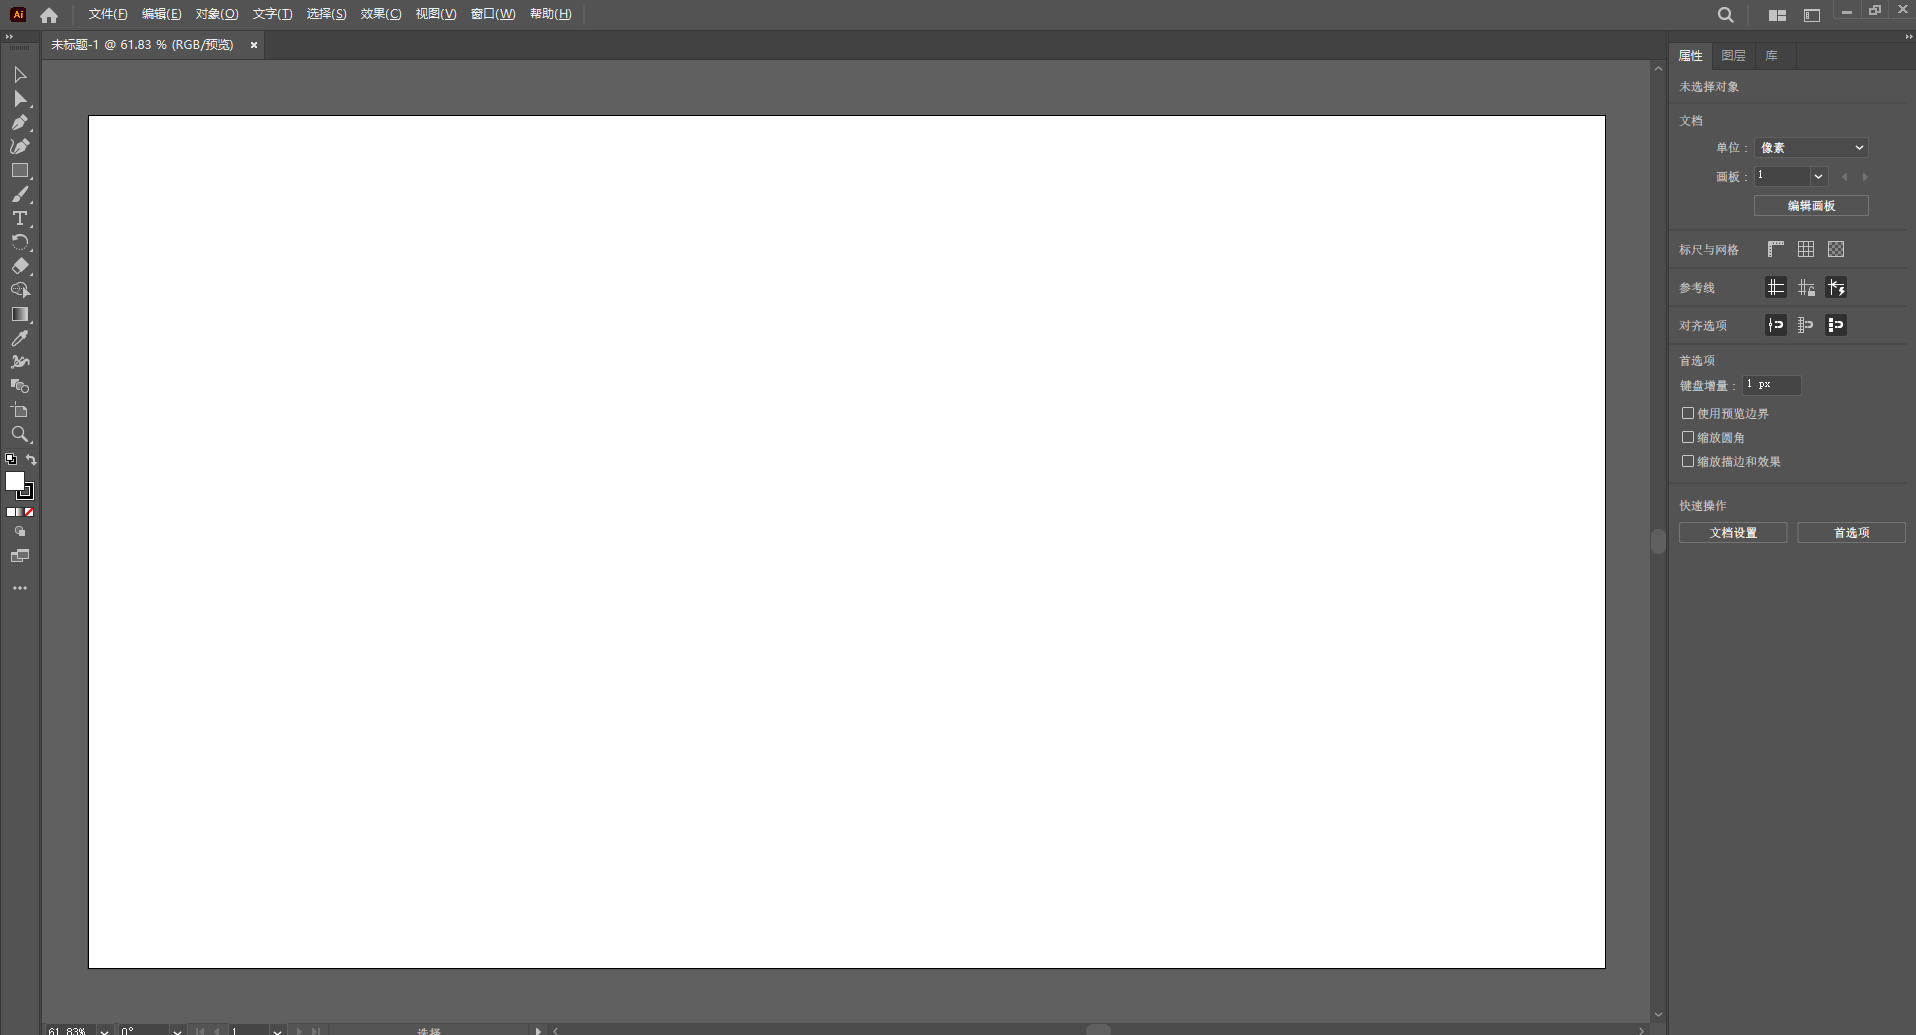 Adobe Illustrator 2023 v27.9.0.80 for ios instal free